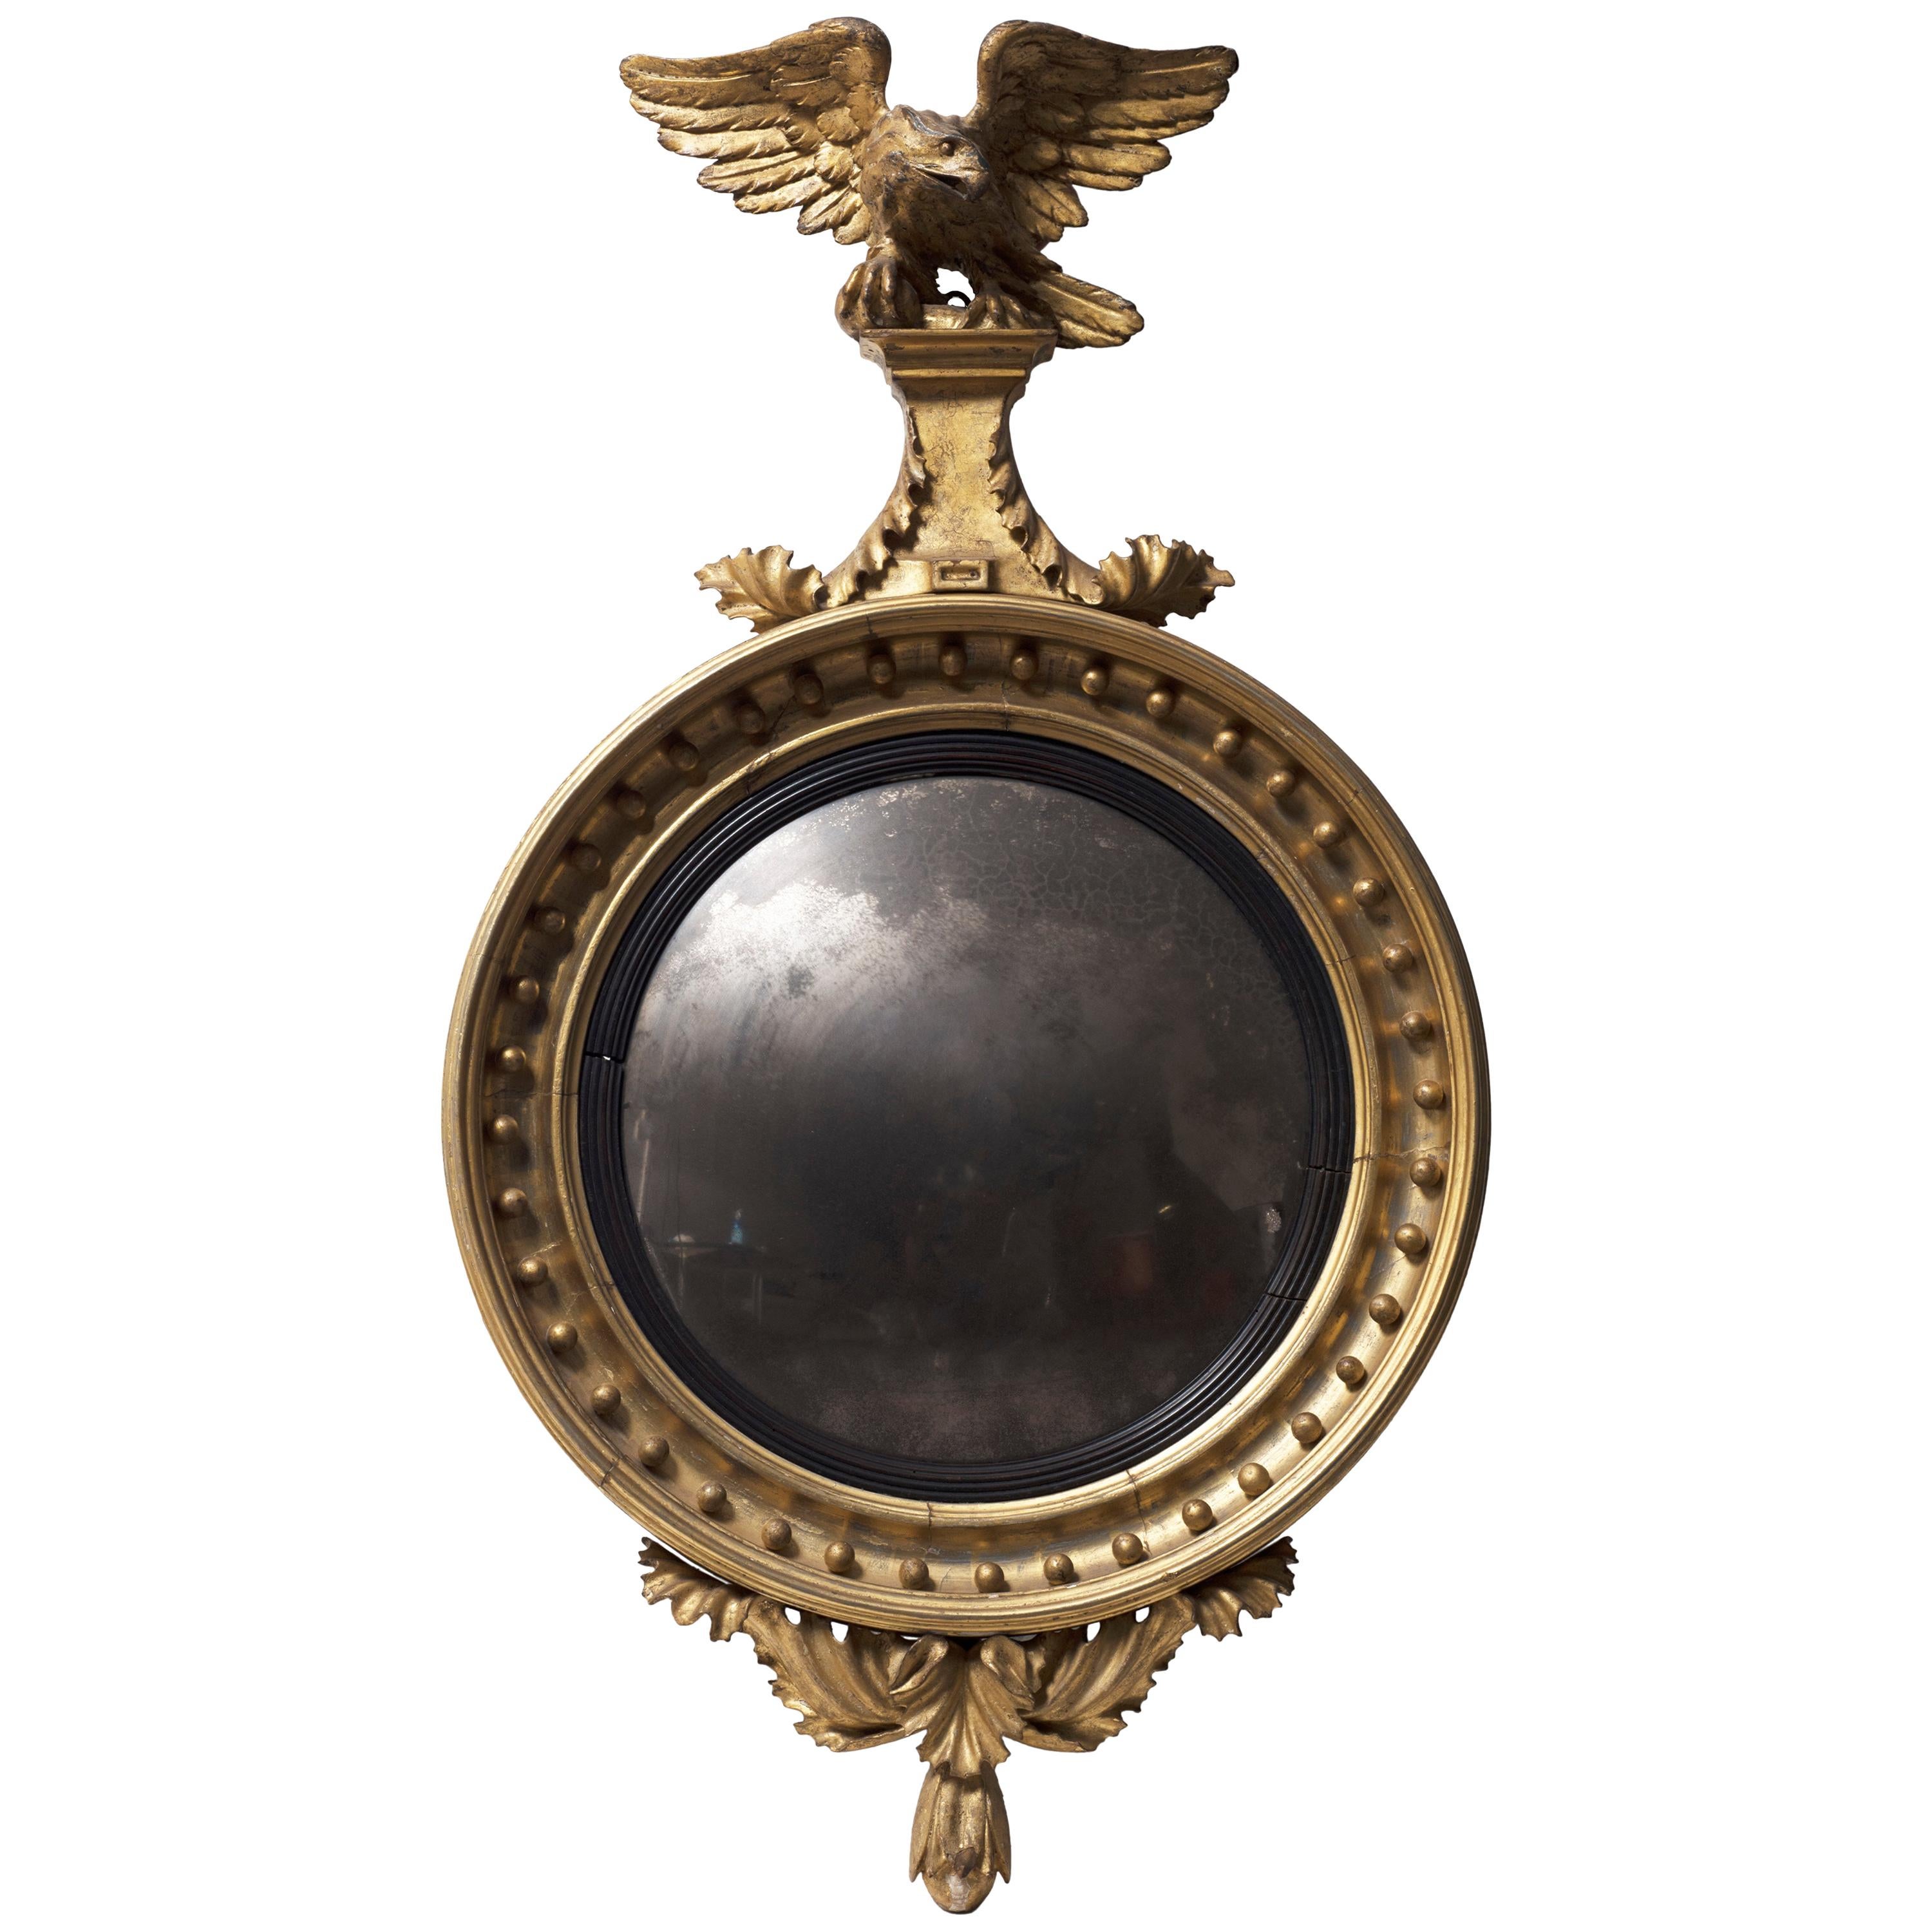 Ancient Regency Era Wall Mirror, 1811-1820